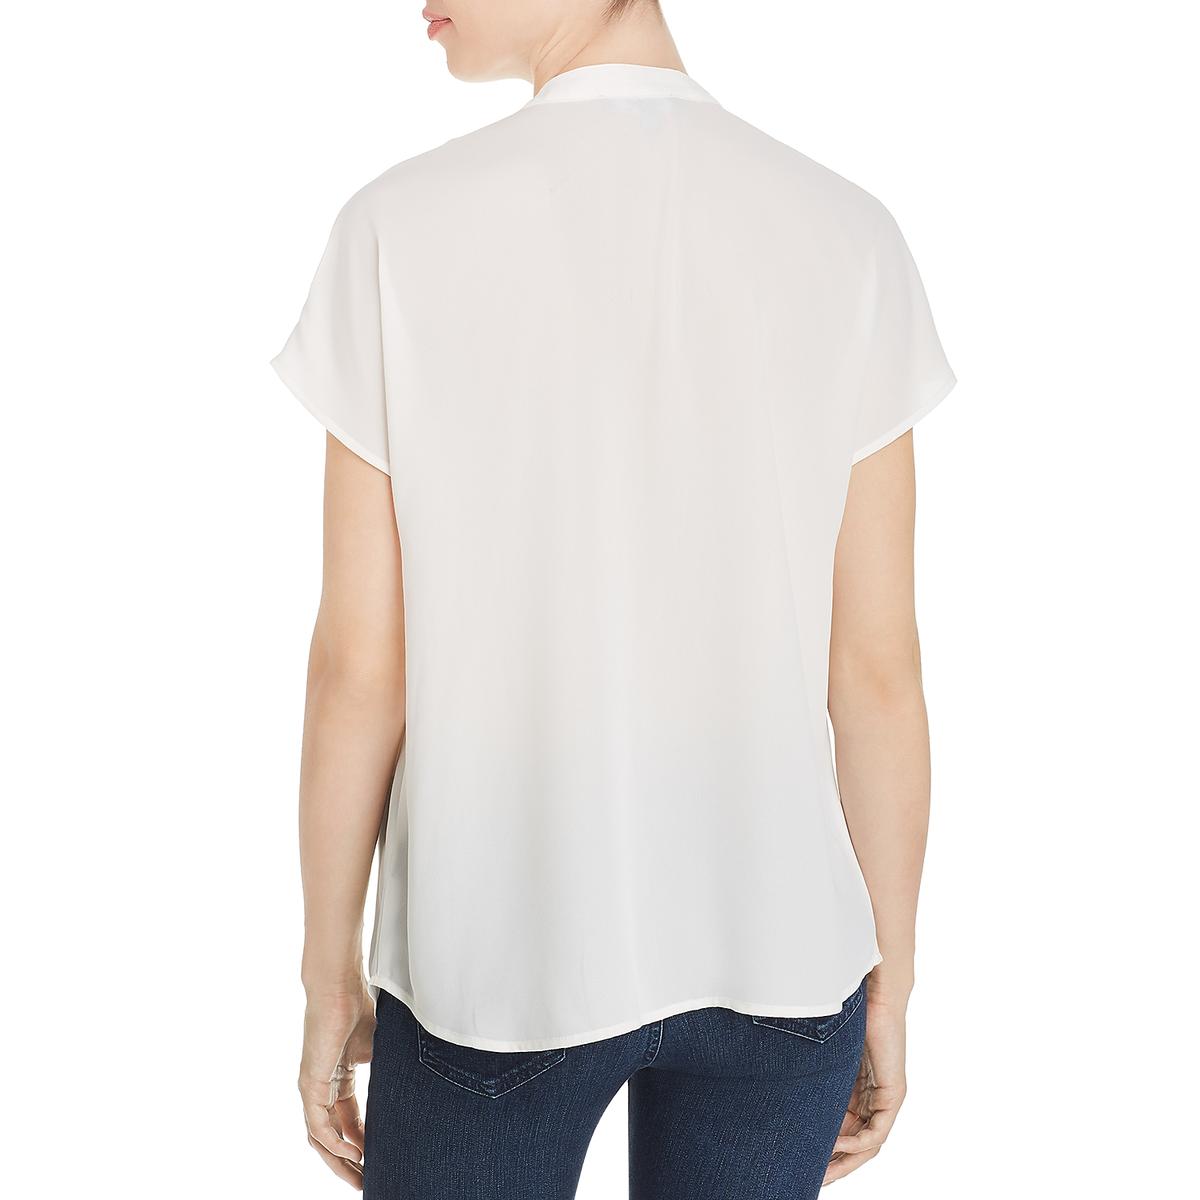 Marled Essentials Womens V-Neck Short Sleeves Top Blouse Shirt BHFO ...